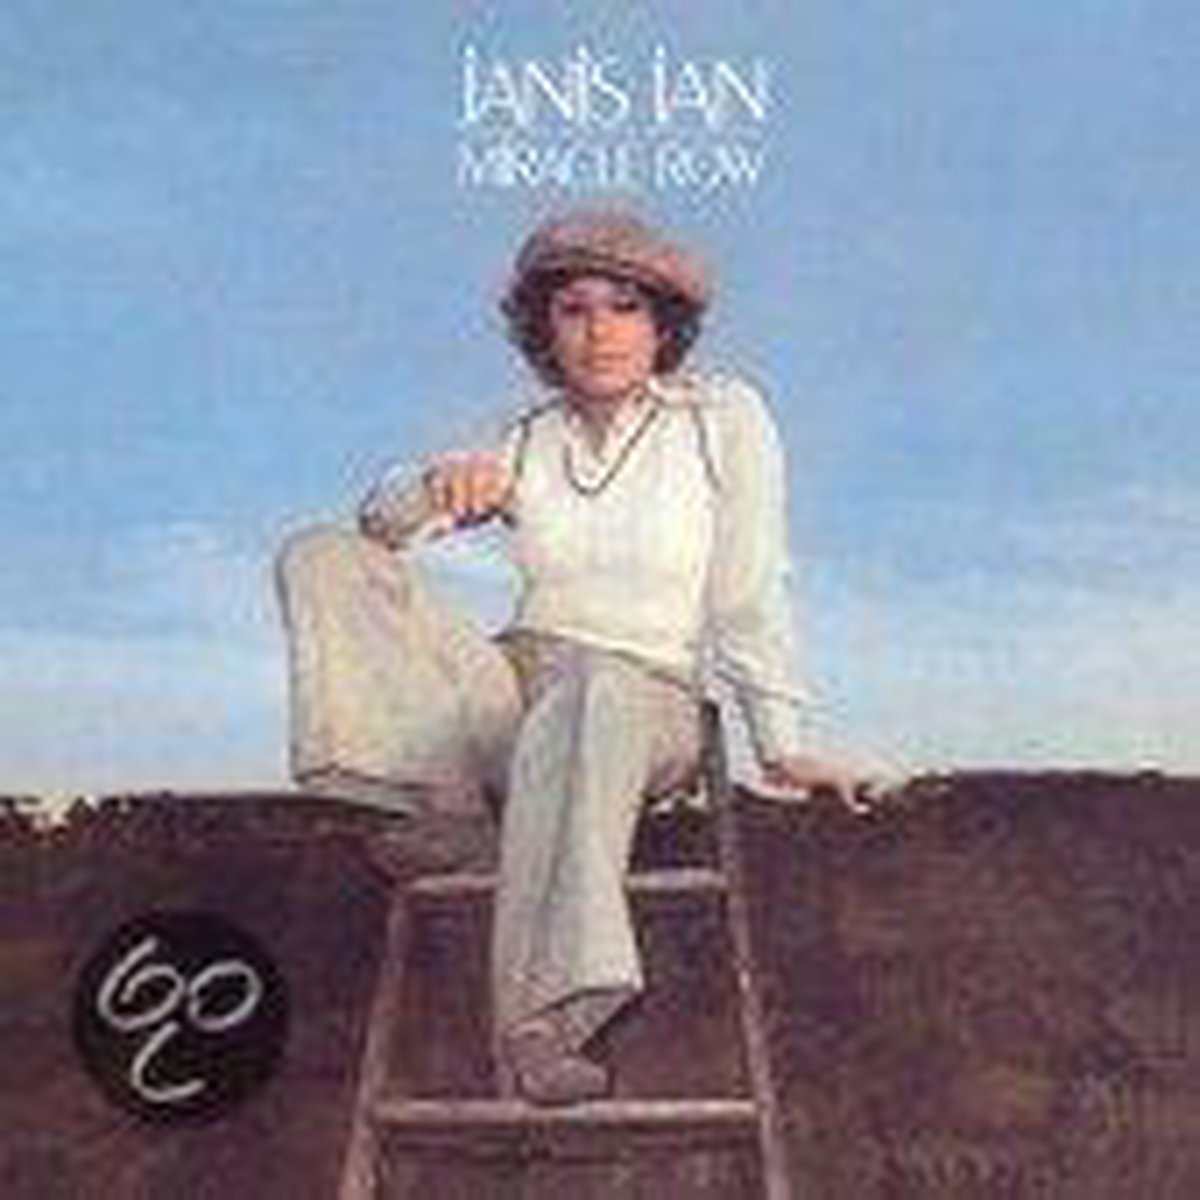 Miracle Row - Janis Ian